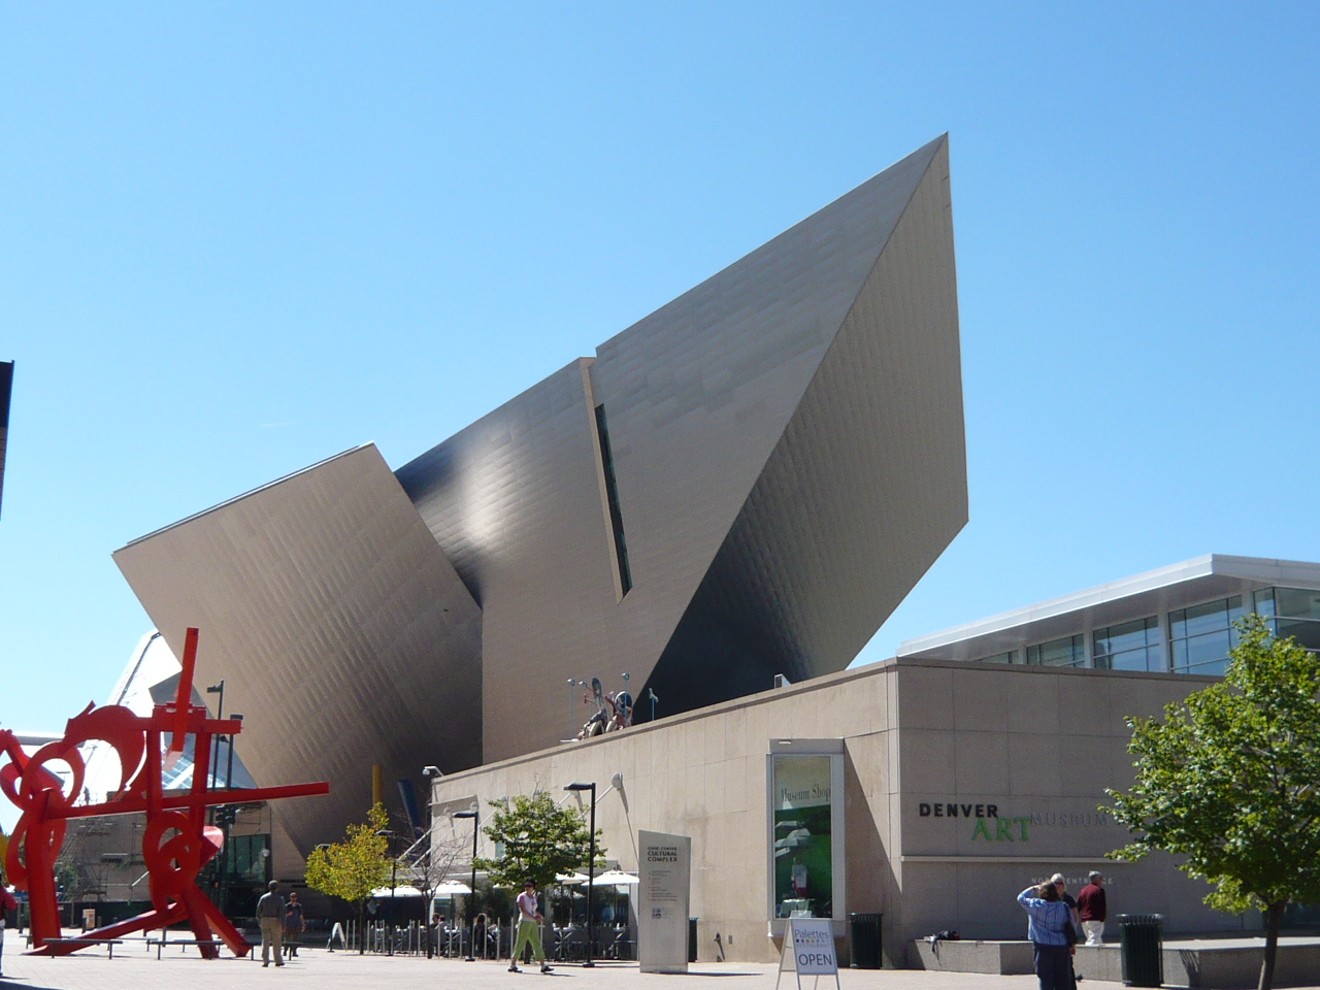 The Hamilton Building of the Denver Art Museum.